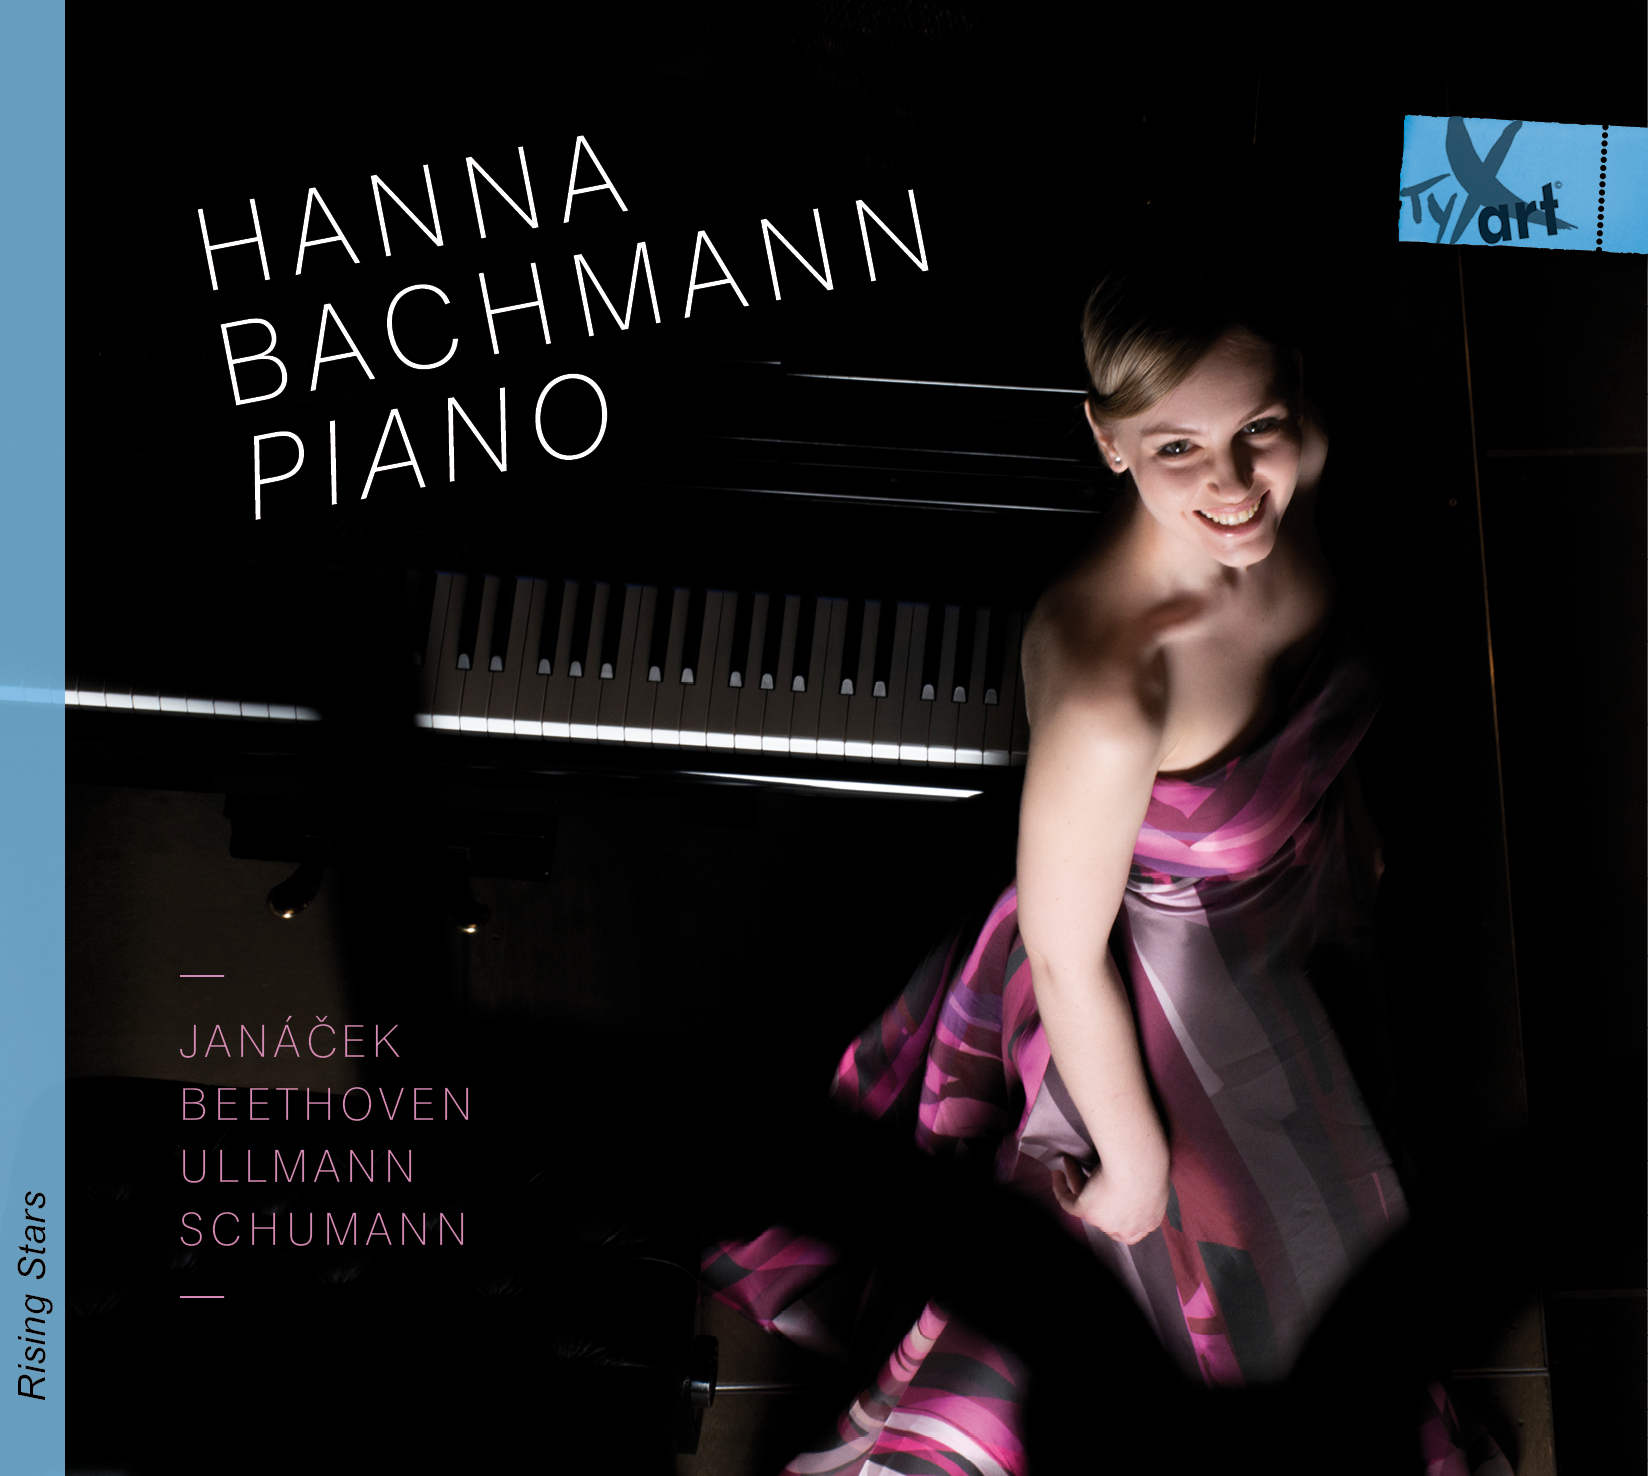 Hanna Bachmann, Piano: Janácek, Beethoven, Ullmann, Schumann